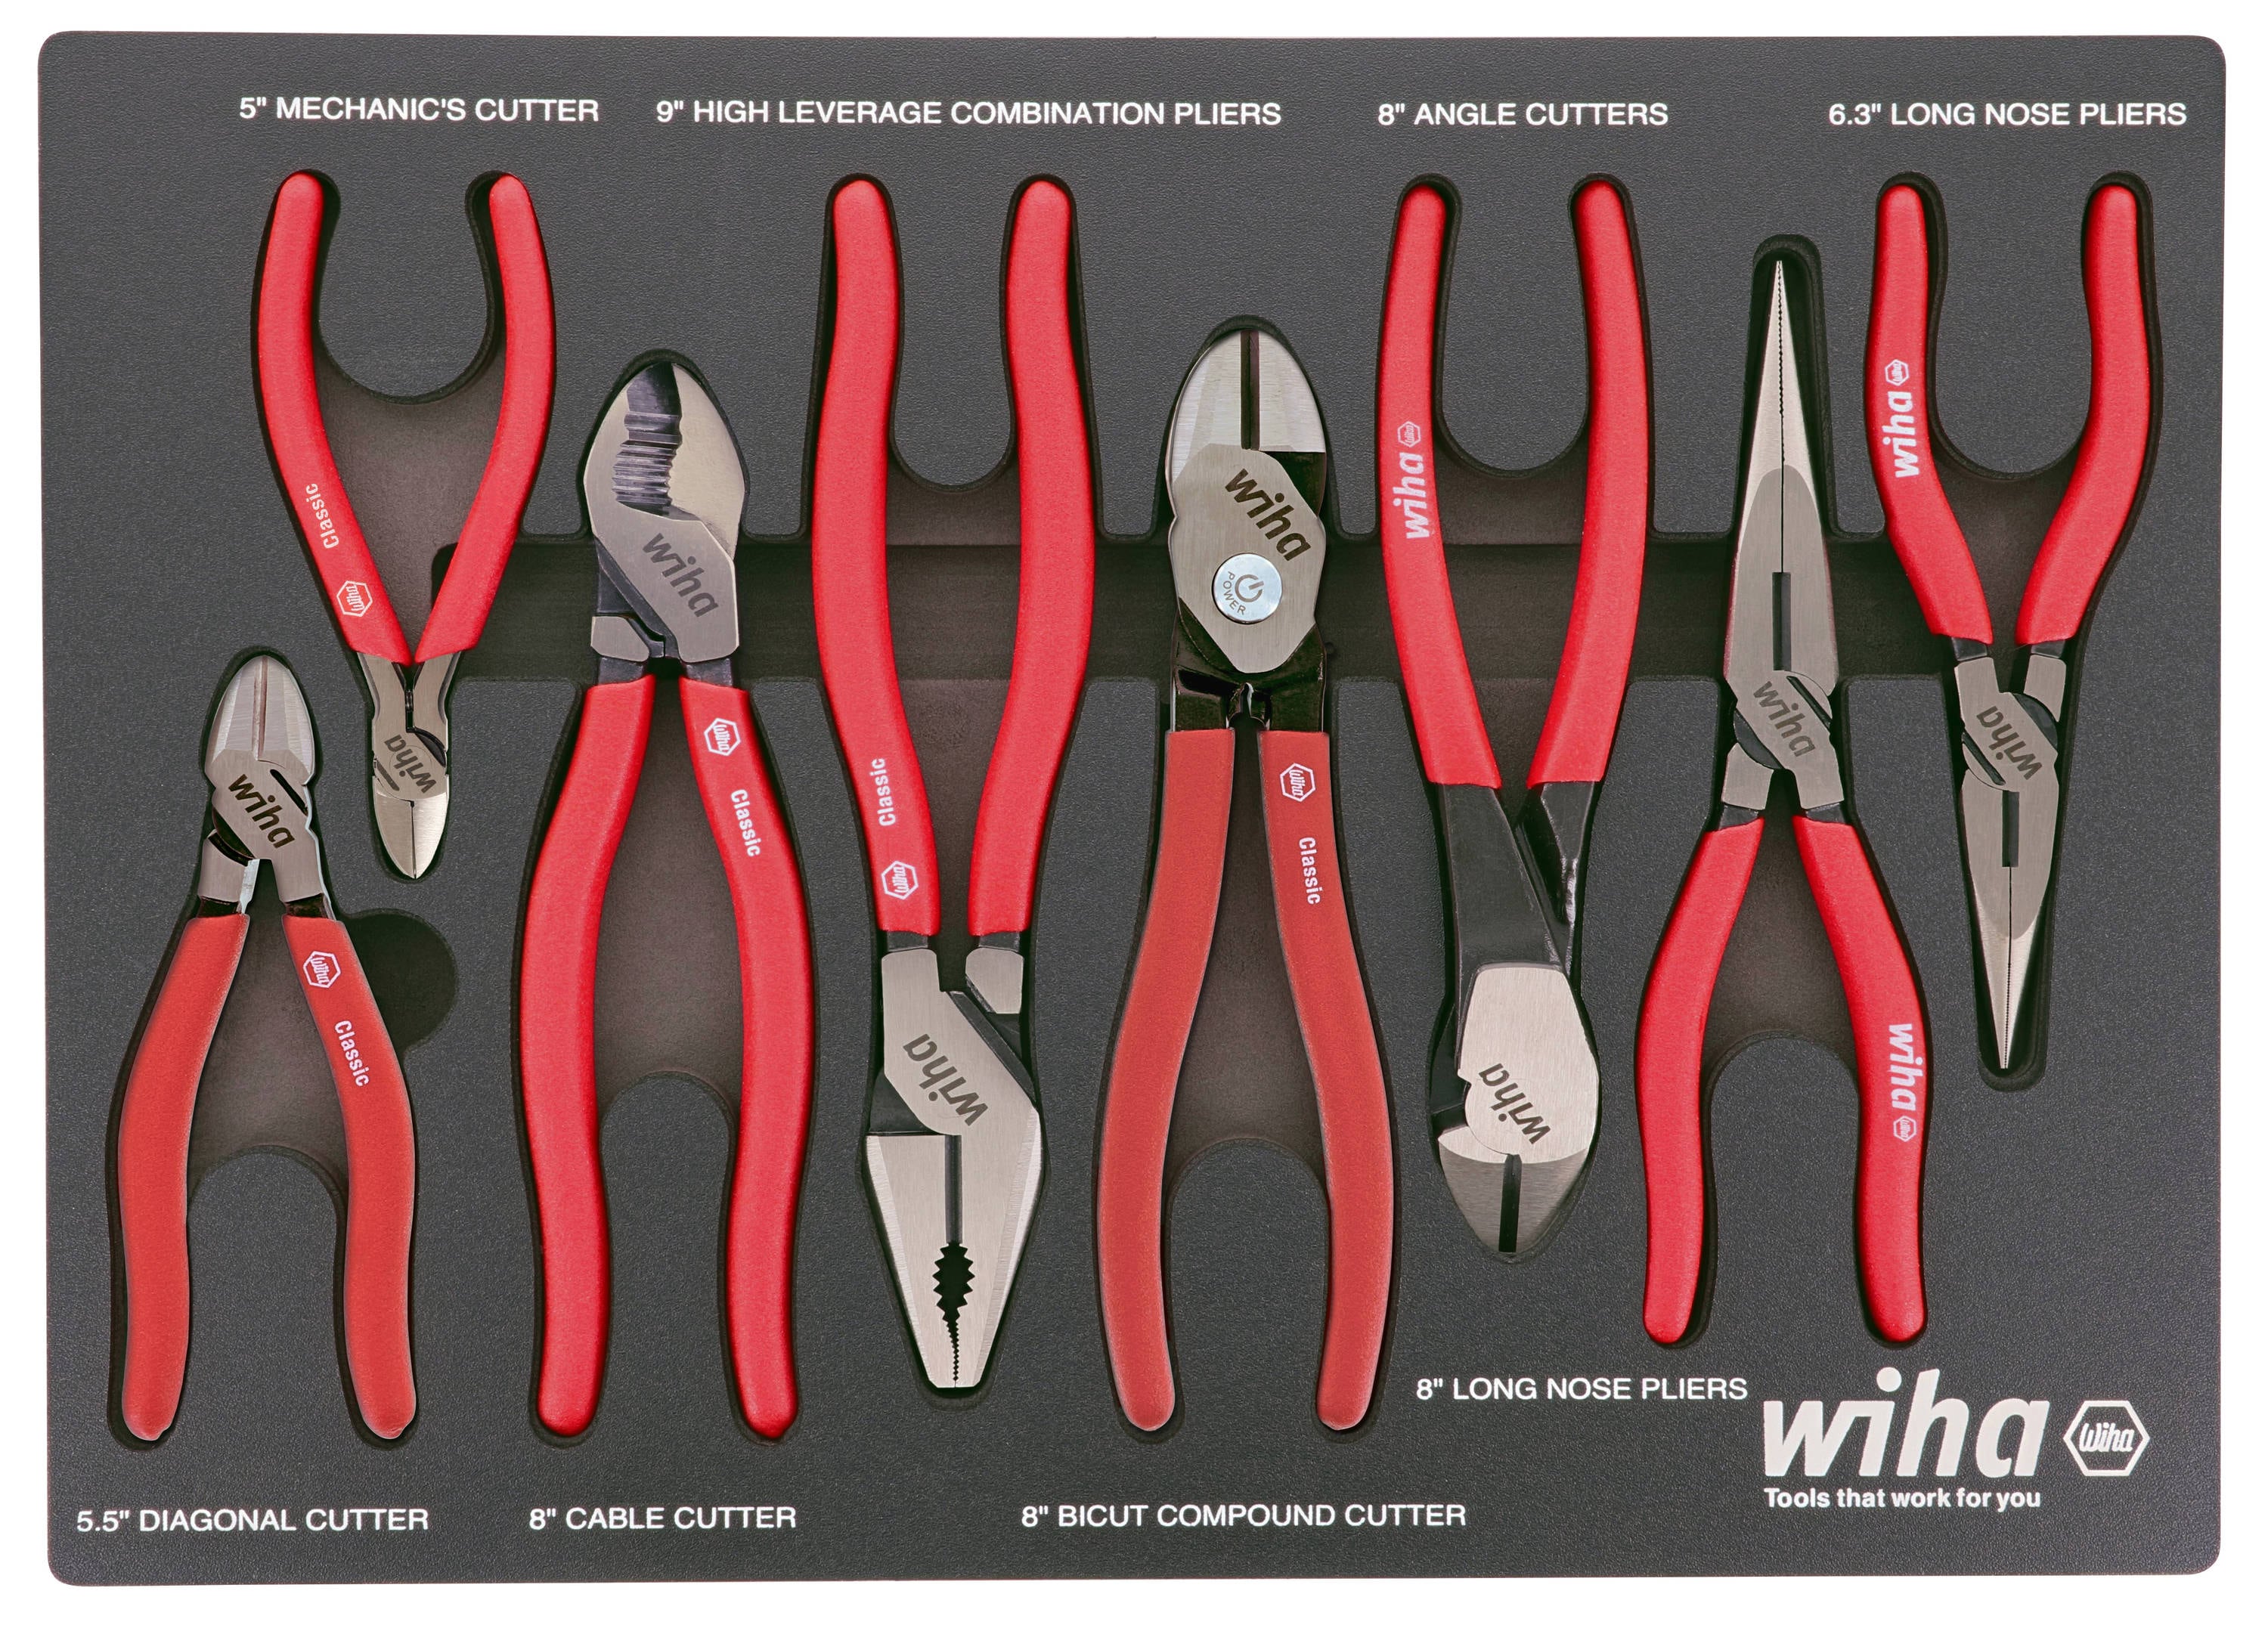 5PC PRECISION PLIERS SET, Tools Pliers Miniature , wholesale tools at